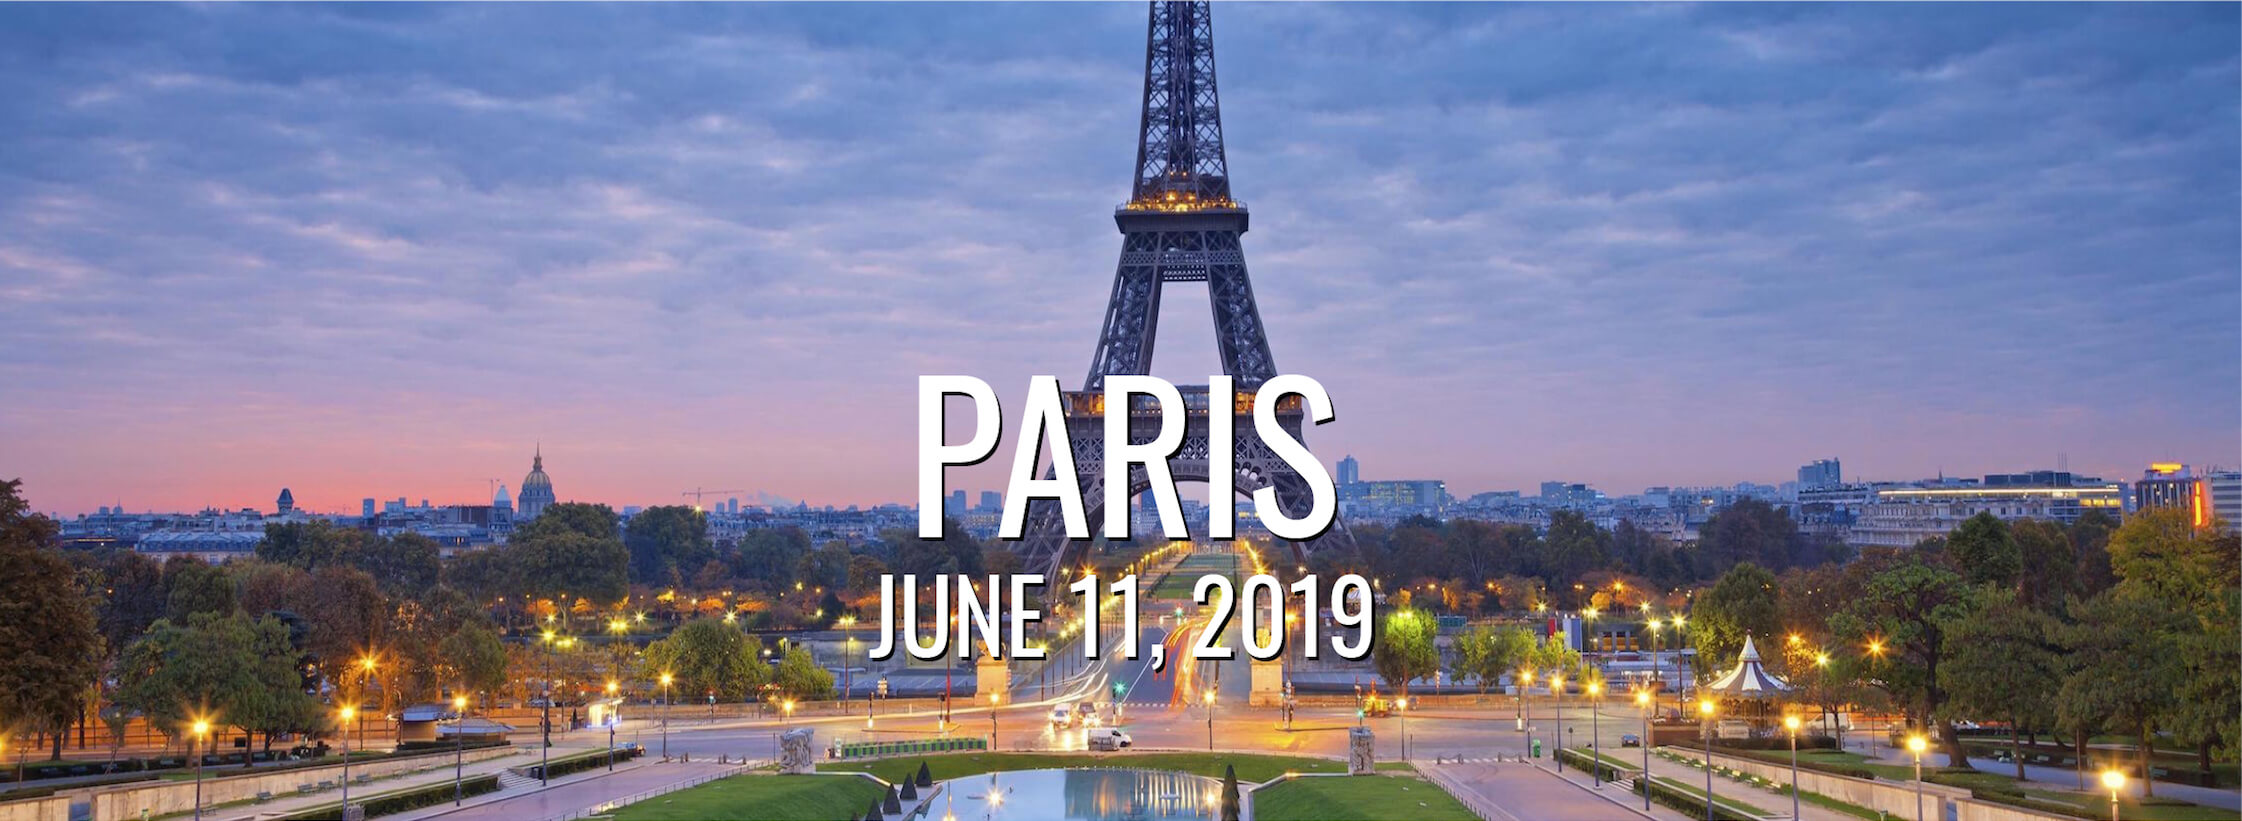 Paris Workshop, June 11, 2019